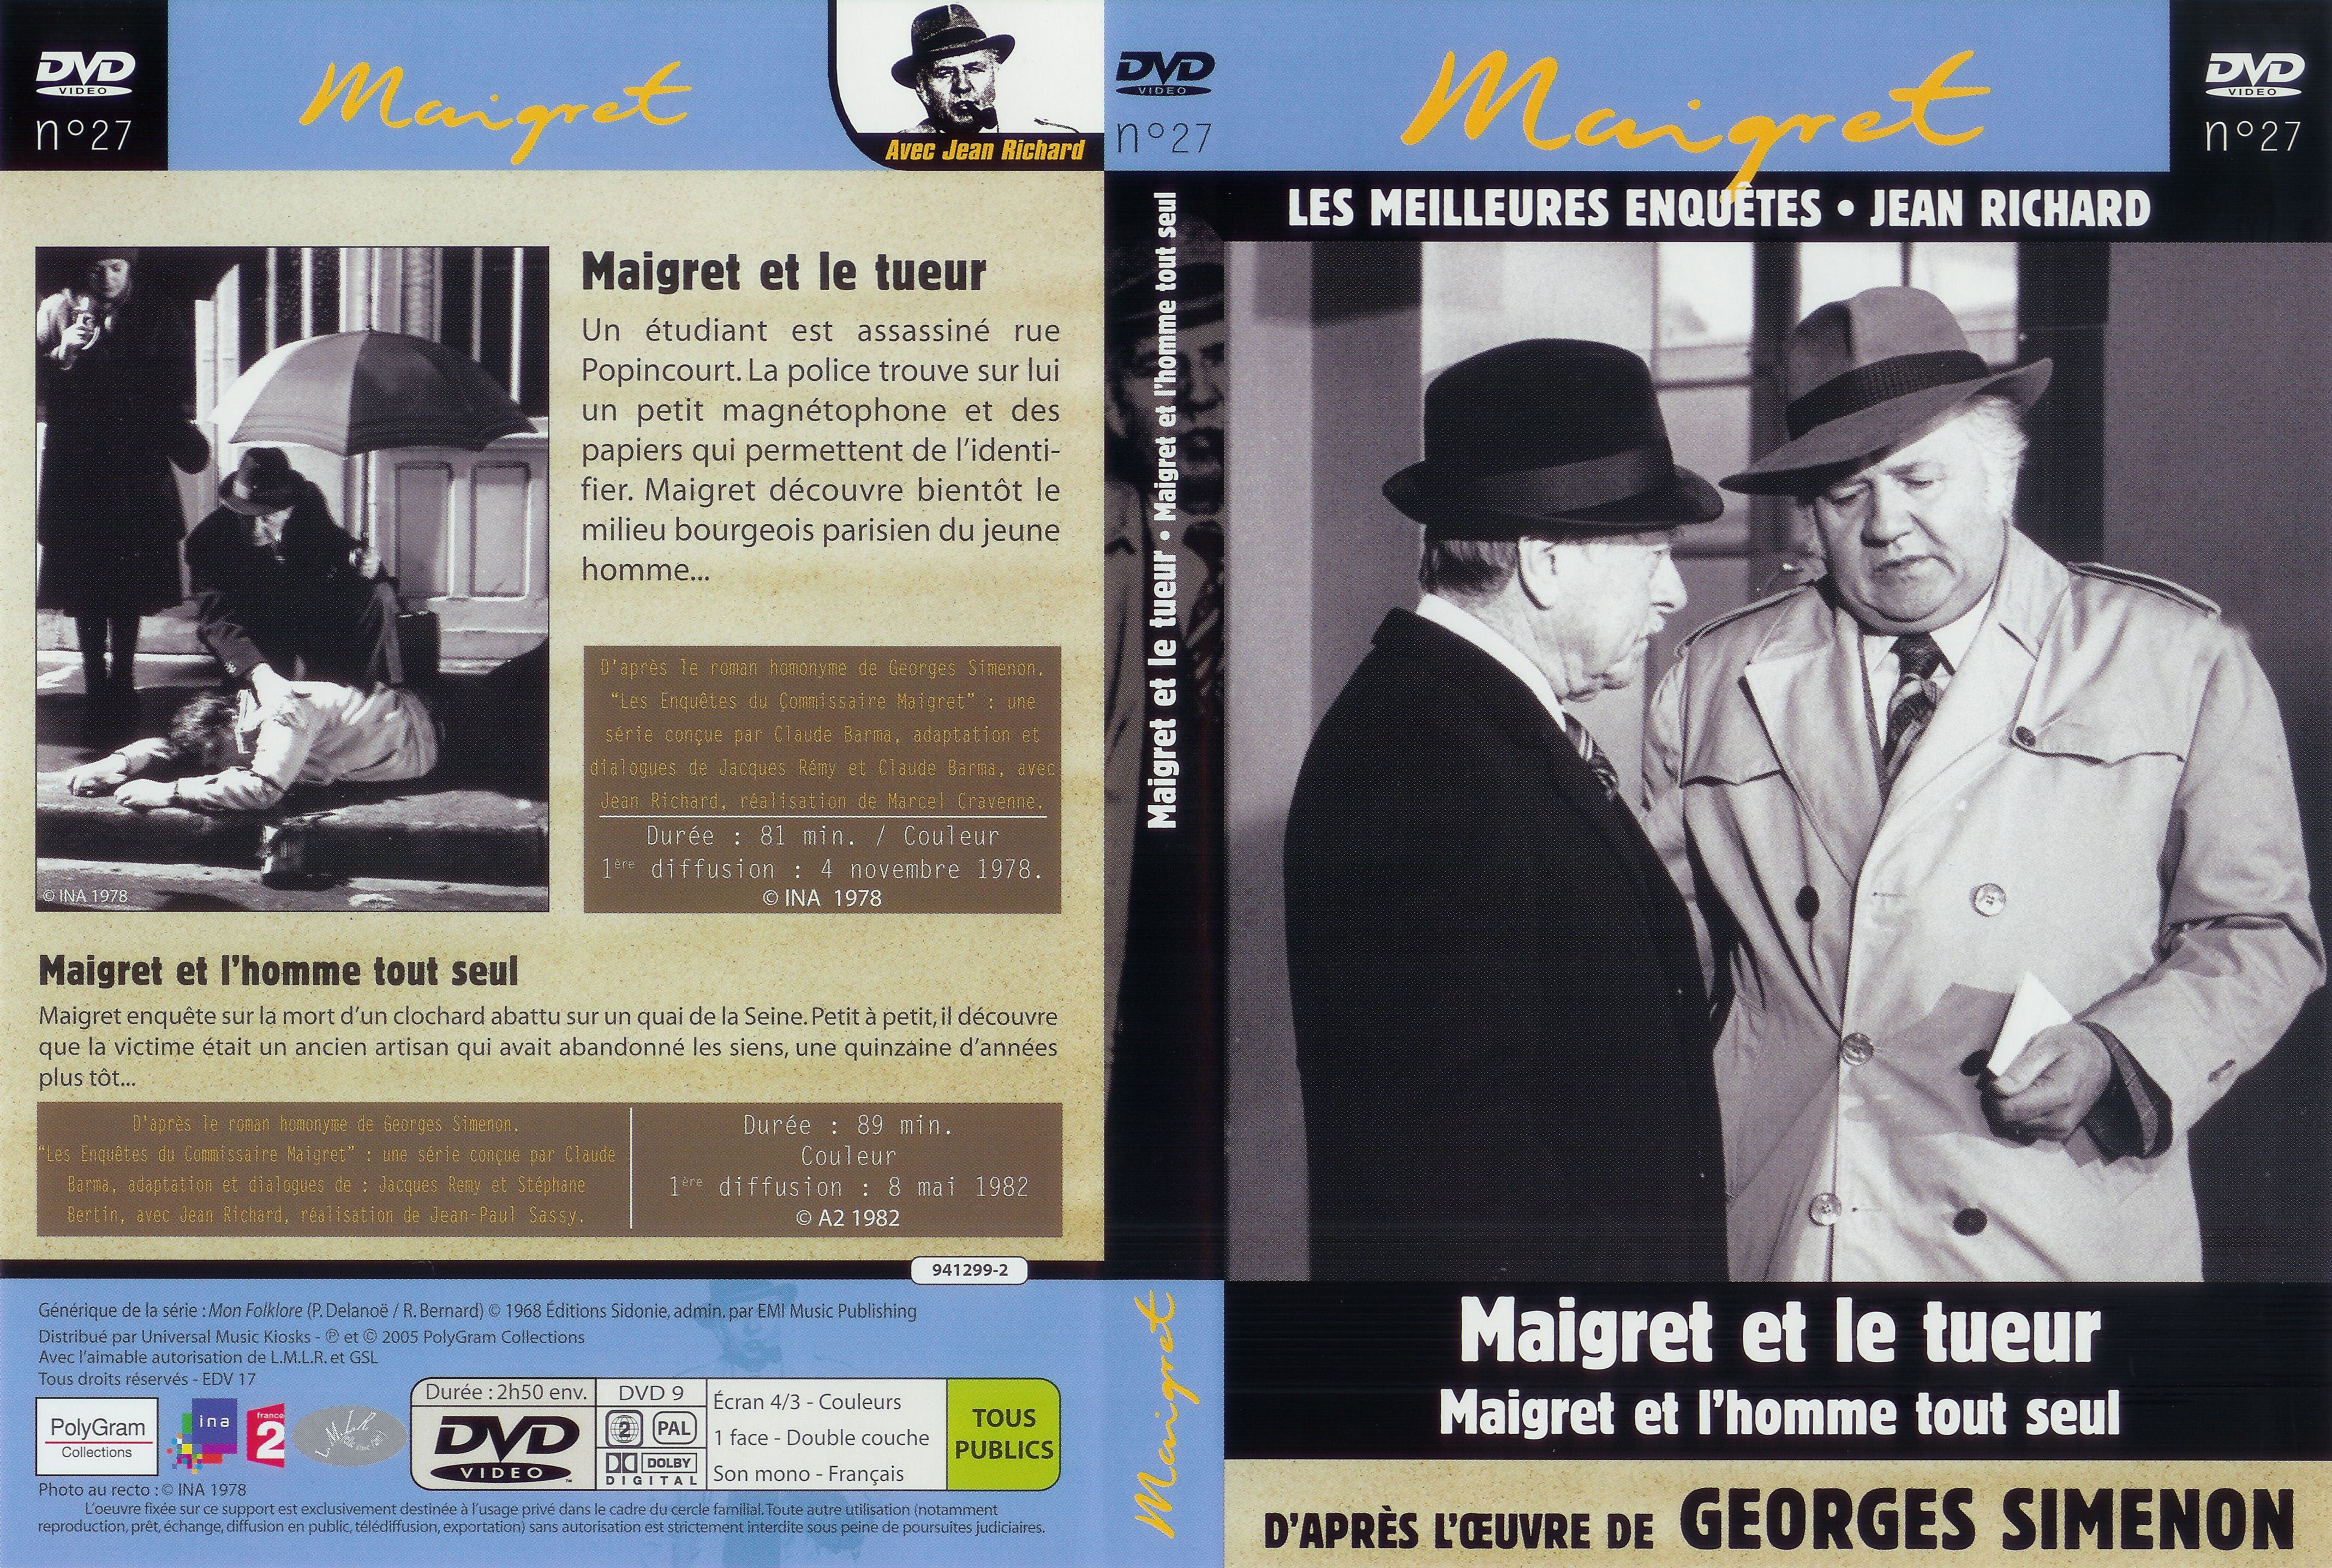 Jaquette DVD Maigret (Jean Richard) vol 27